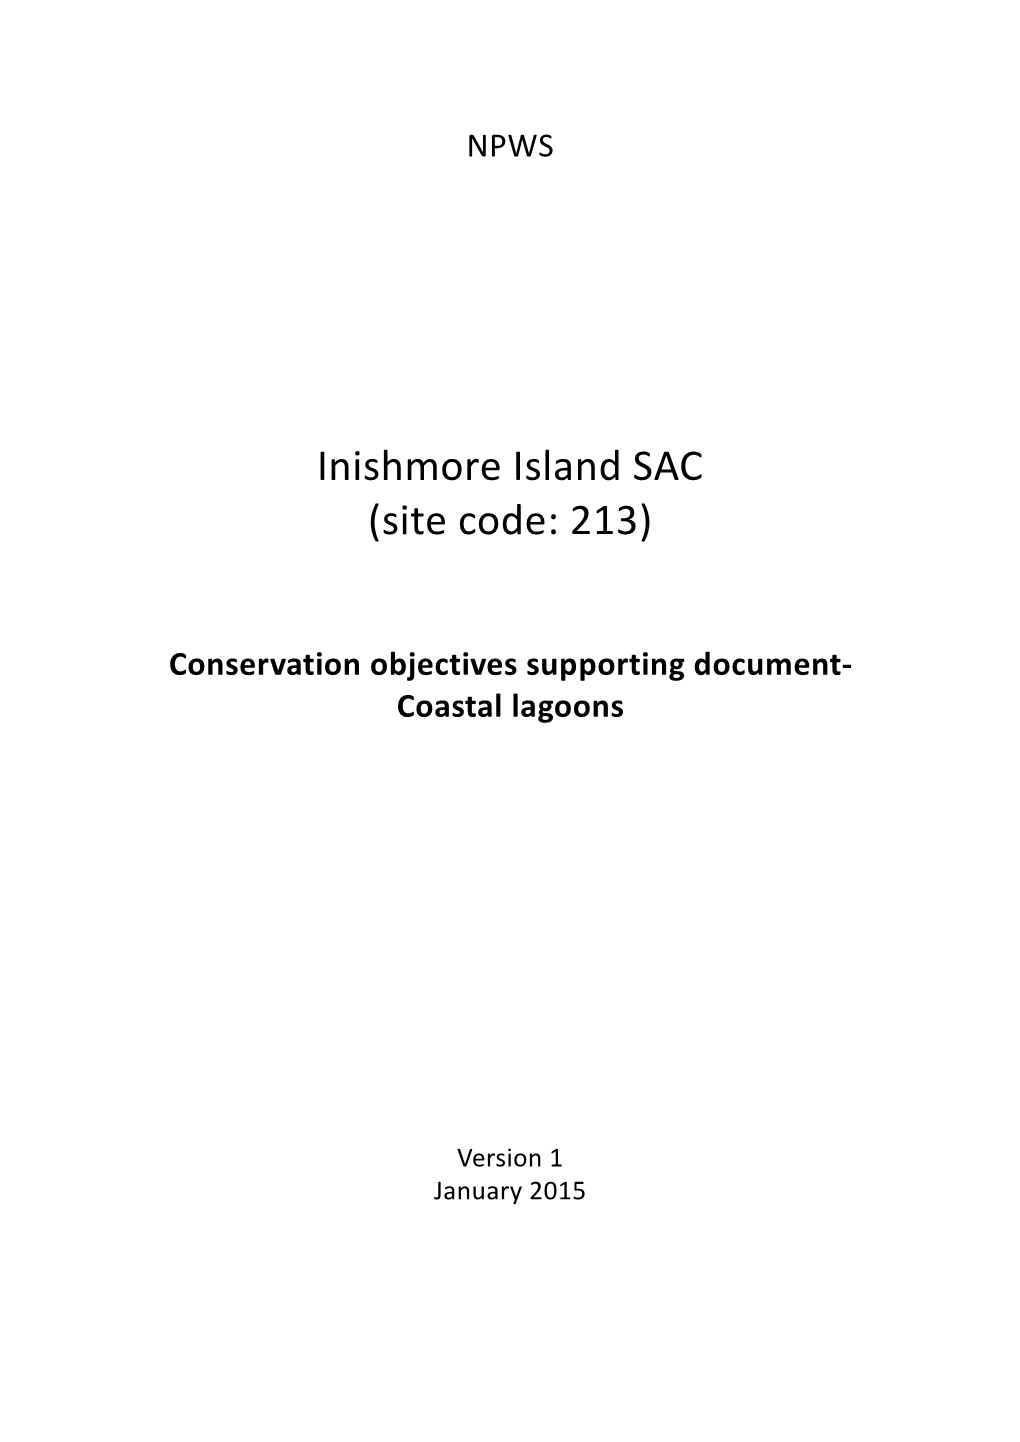 Inishmore Island SAC (Site Code: 213)